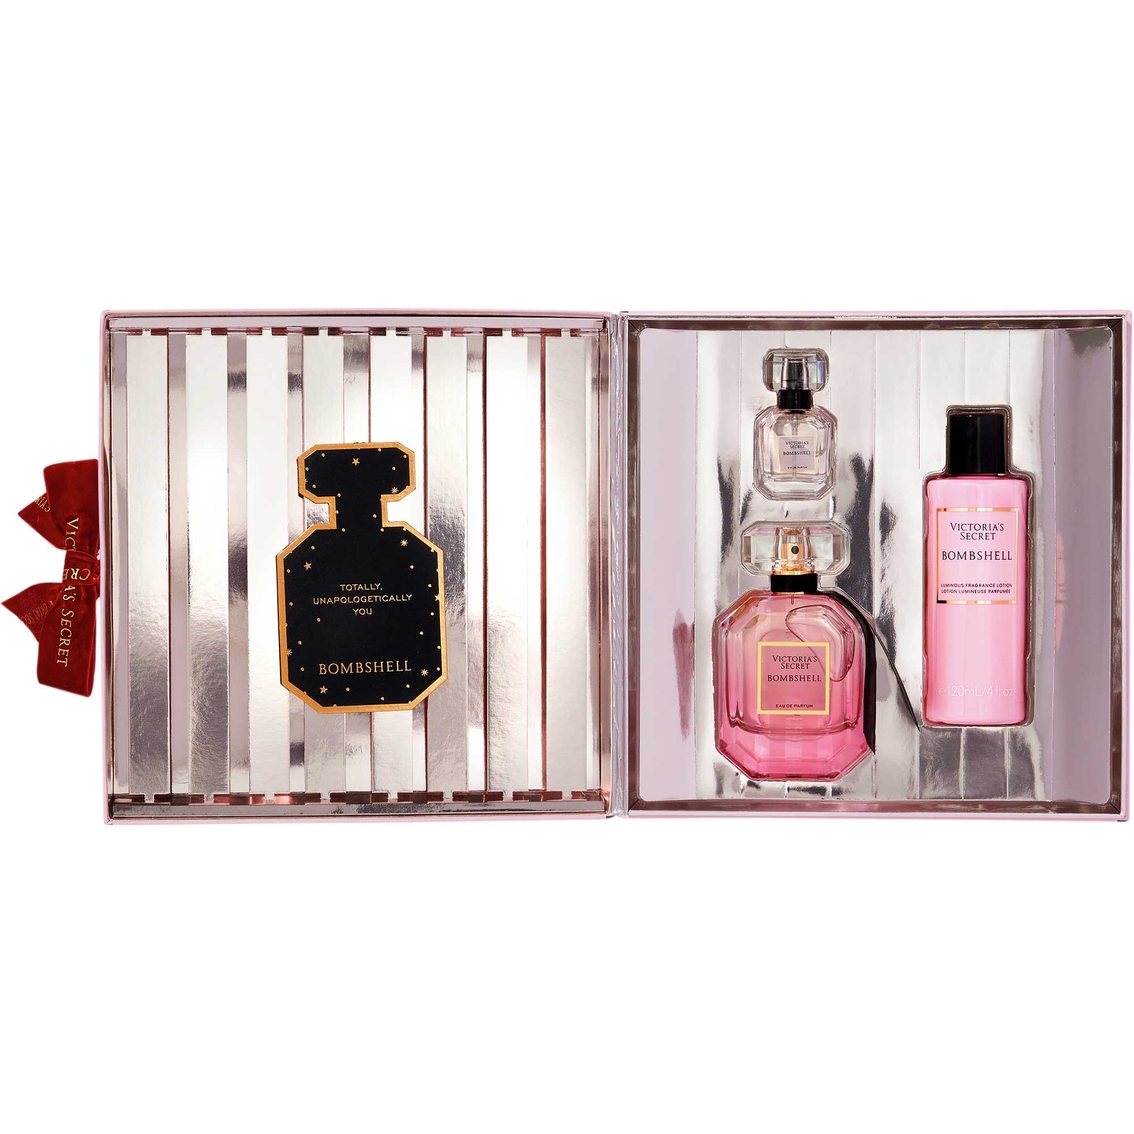 Victoria's Secret Bombshell Medium 3 pc. Fragrance Box - Image 2 of 2